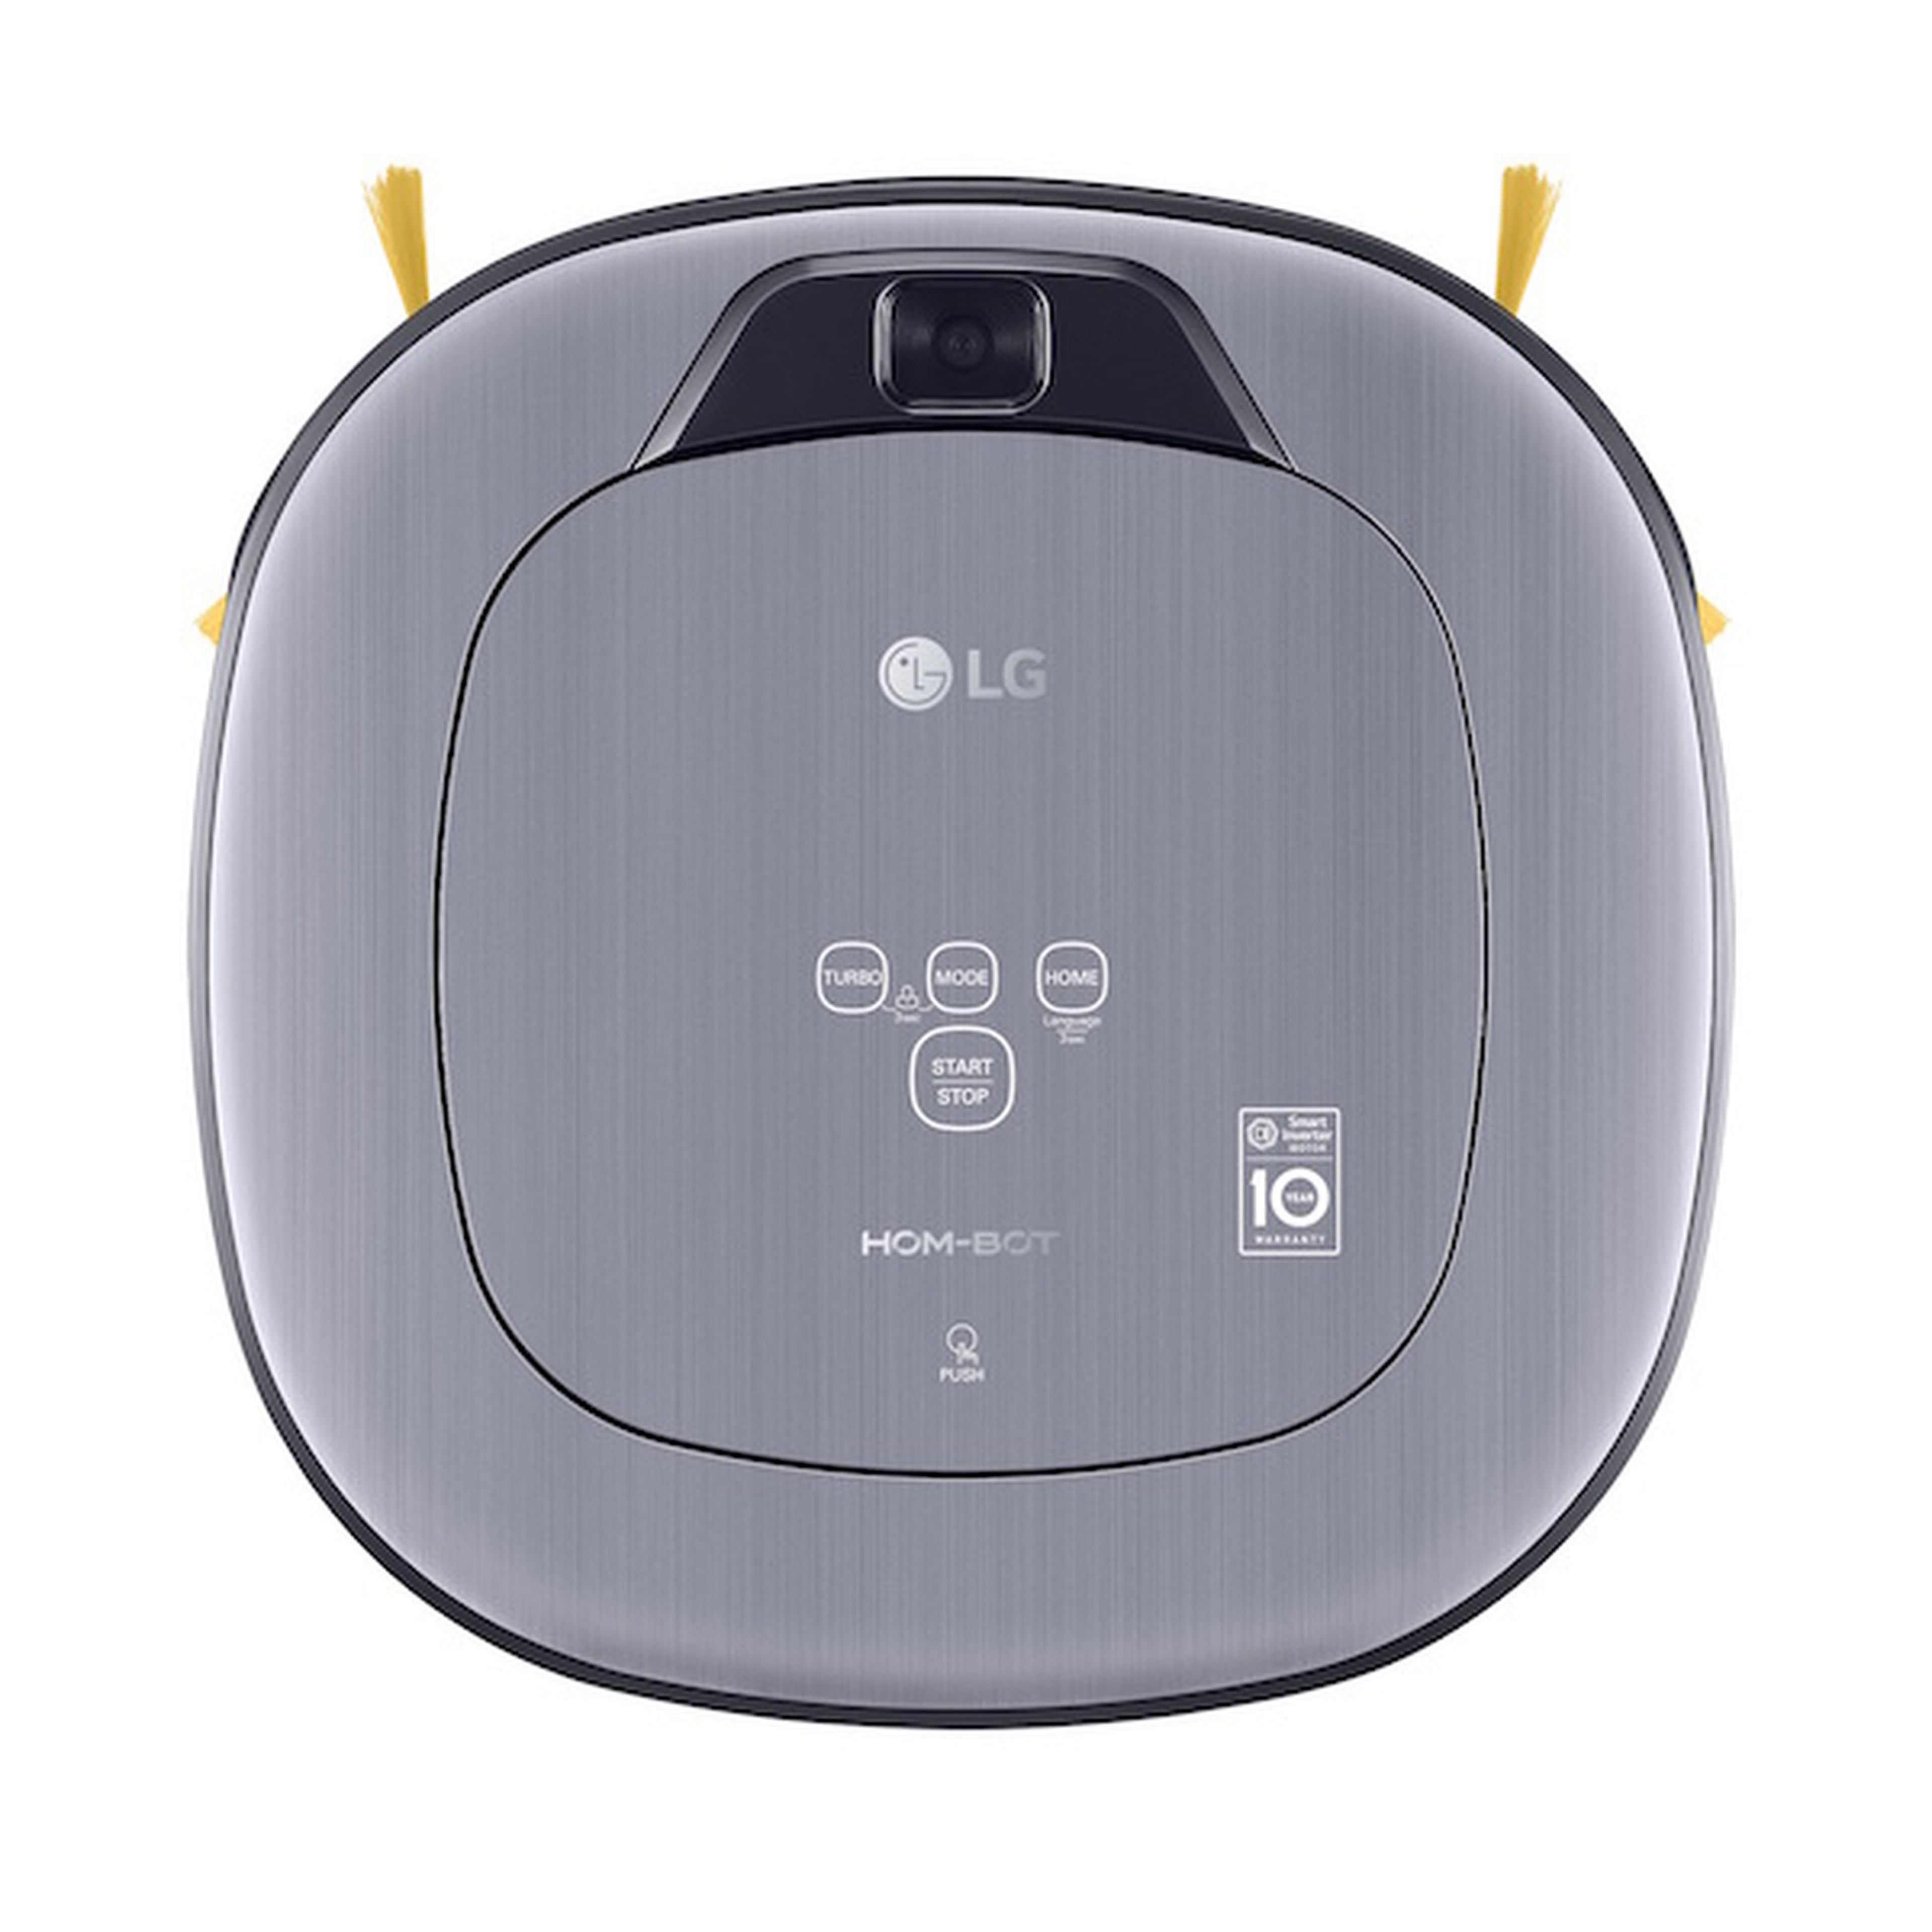 Moler Se infla prestar LG Hombot Square Turbo, un robot aspirador con sistema de vigilancia |  Computer Hoy